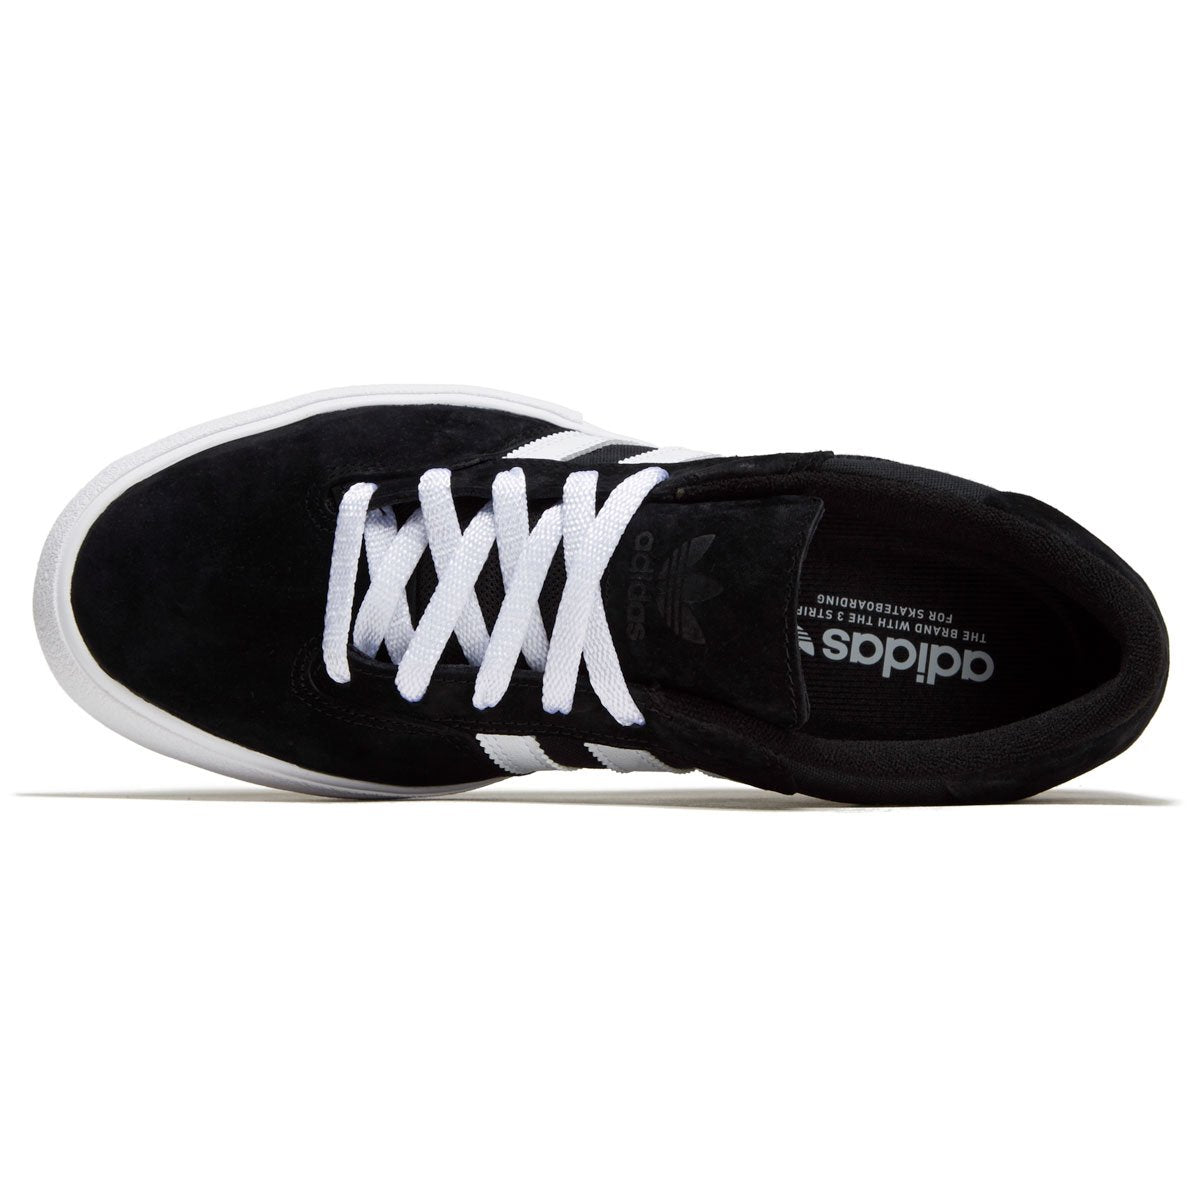 Adidas Matchbreak Super Shoes - Black/White/Gold Metallic image 3